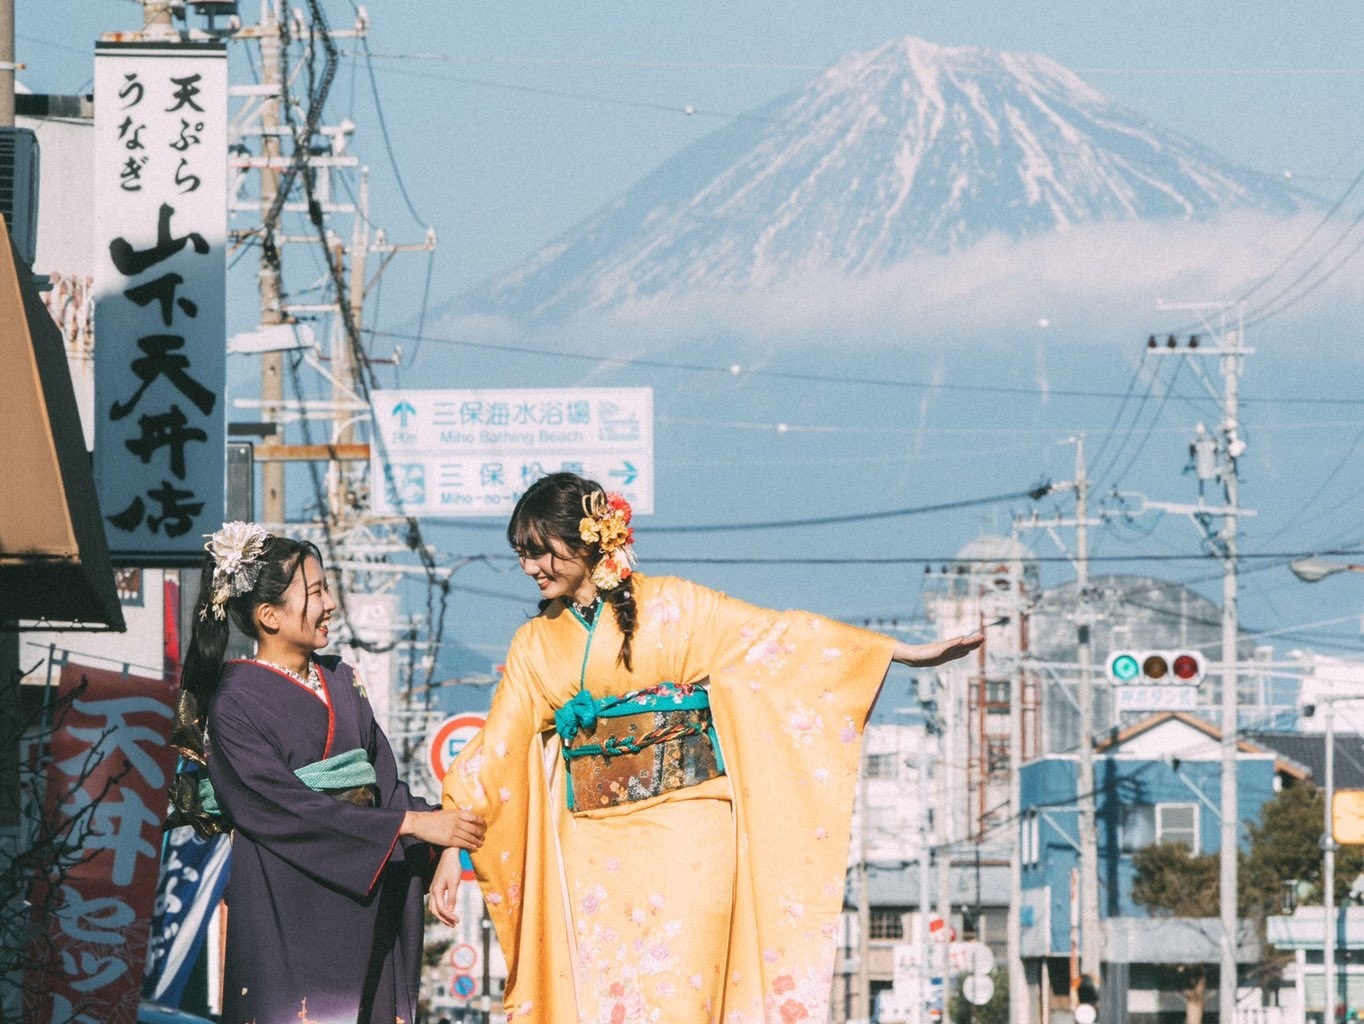 Mt. Fuji schoolgirl photo models who charmed Japan years ago reunite to  celebrate Coming of Age Day | SoraNews24 -Japan News-